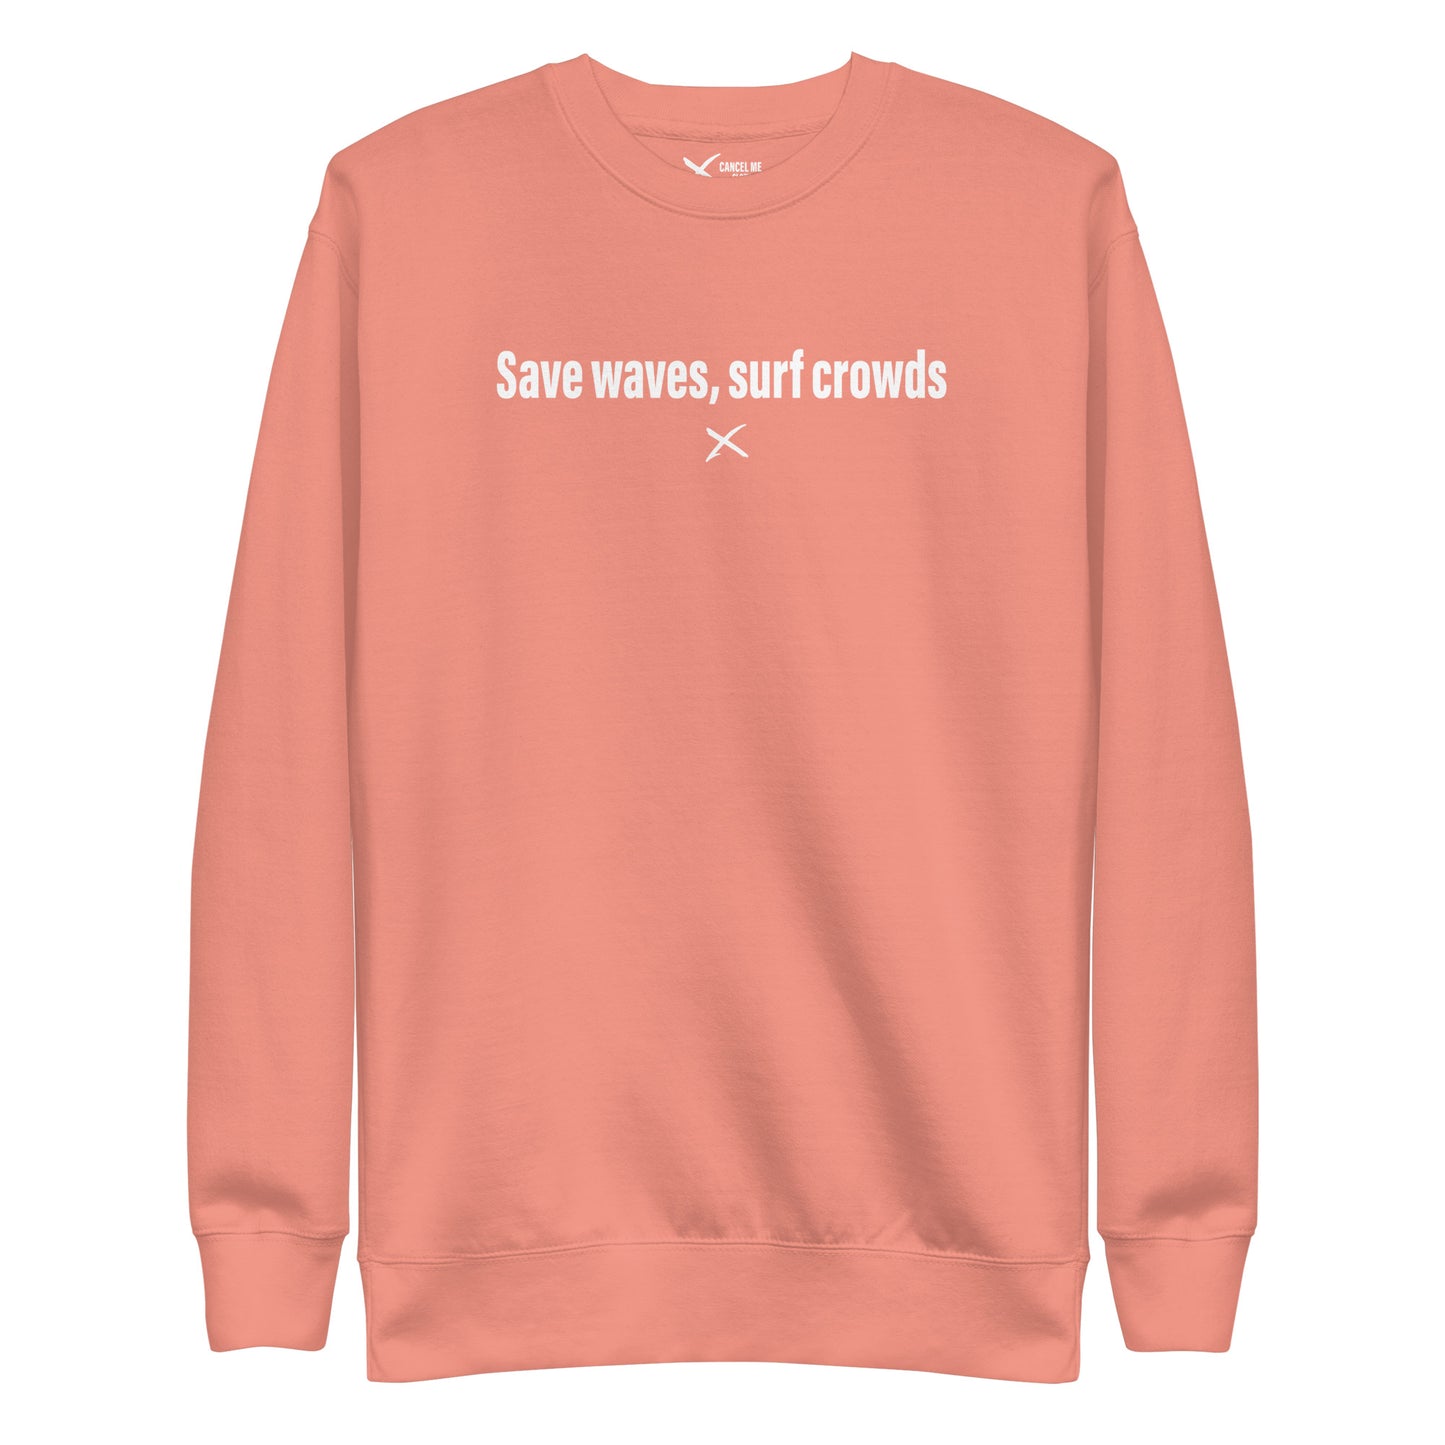 Save waves, surf crowds - Sweatshirt